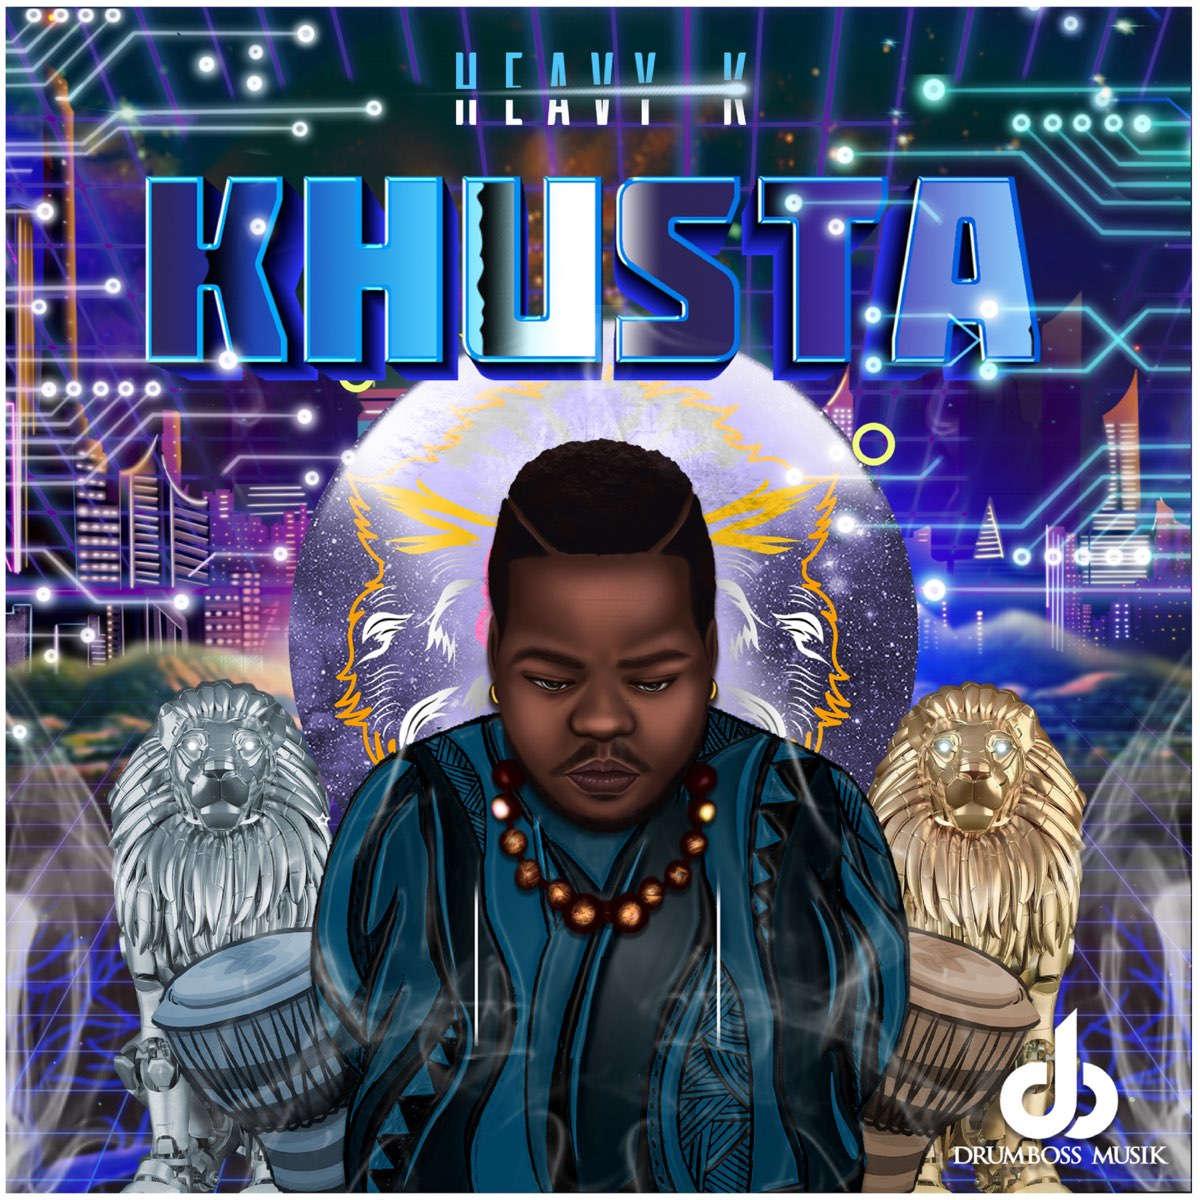 Heavy-K - KHUSTA Album